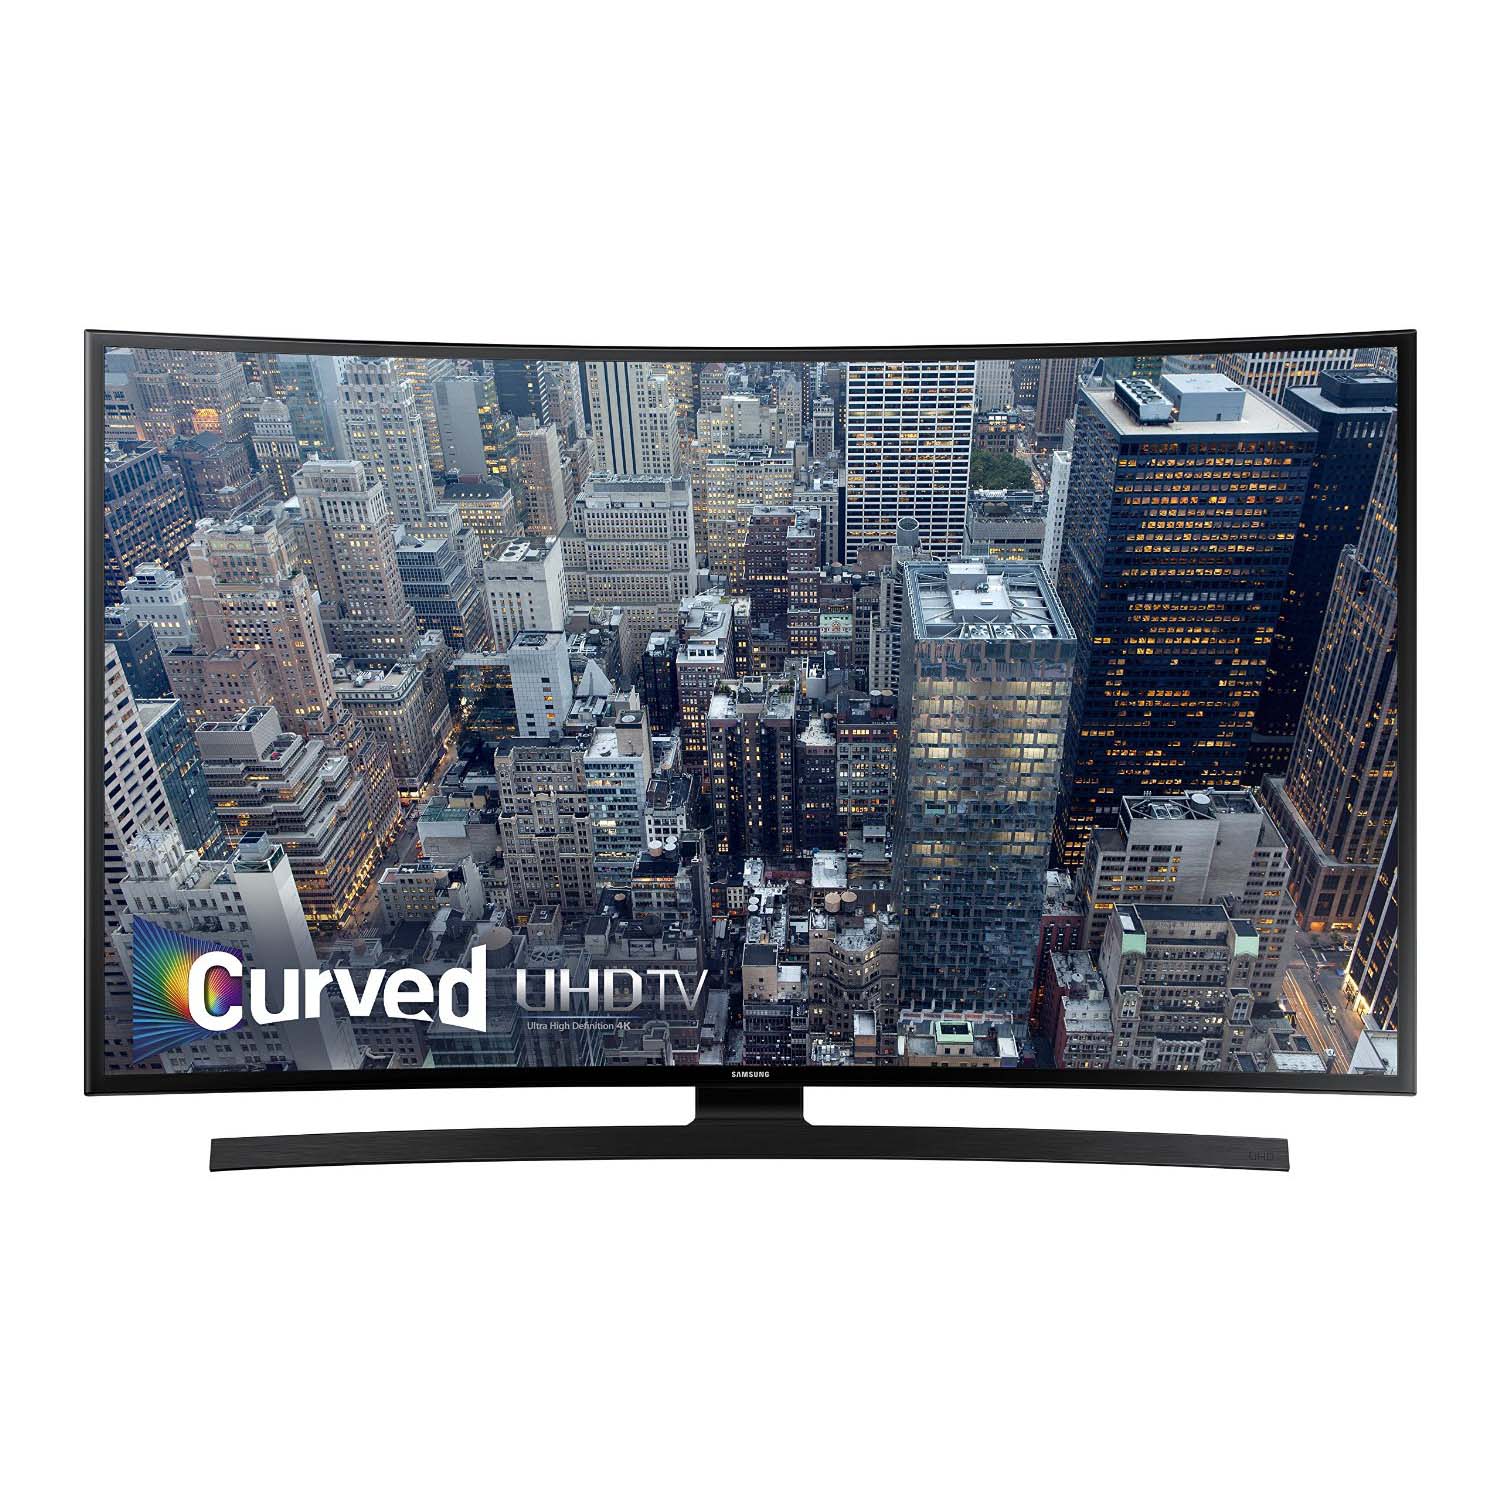 Samsung UN65JU6700 Curved 65-Inch 4K Ultra HD Smart LED TV (2015 Model) *관부가세 별도*